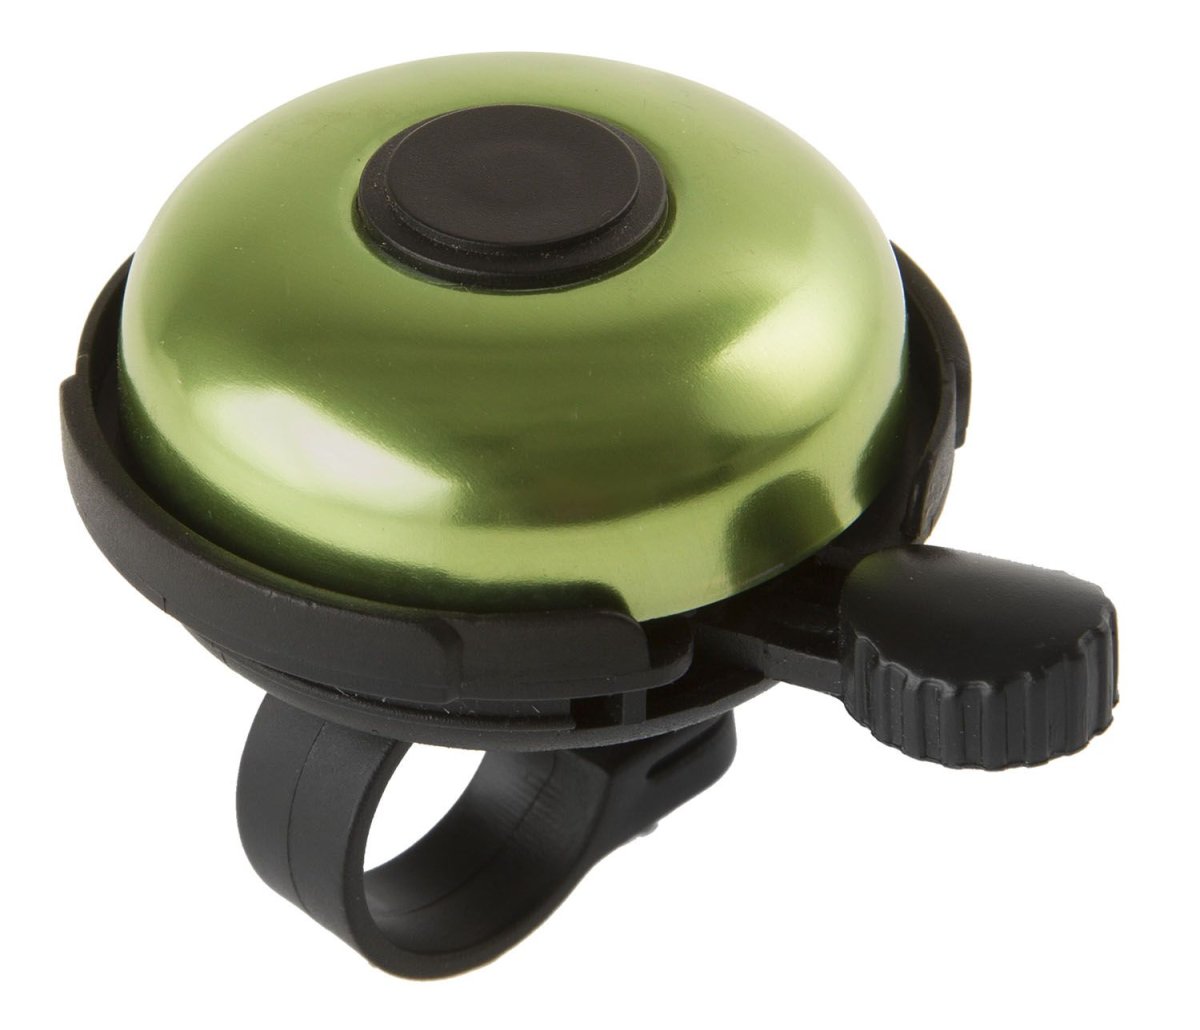 Звонок велосипедный M-Wave, алюминий/пластик, D=53 мм, черно-зеленый, 5-420155 звонок велосипедный bbb minifit зеленый bbb 16